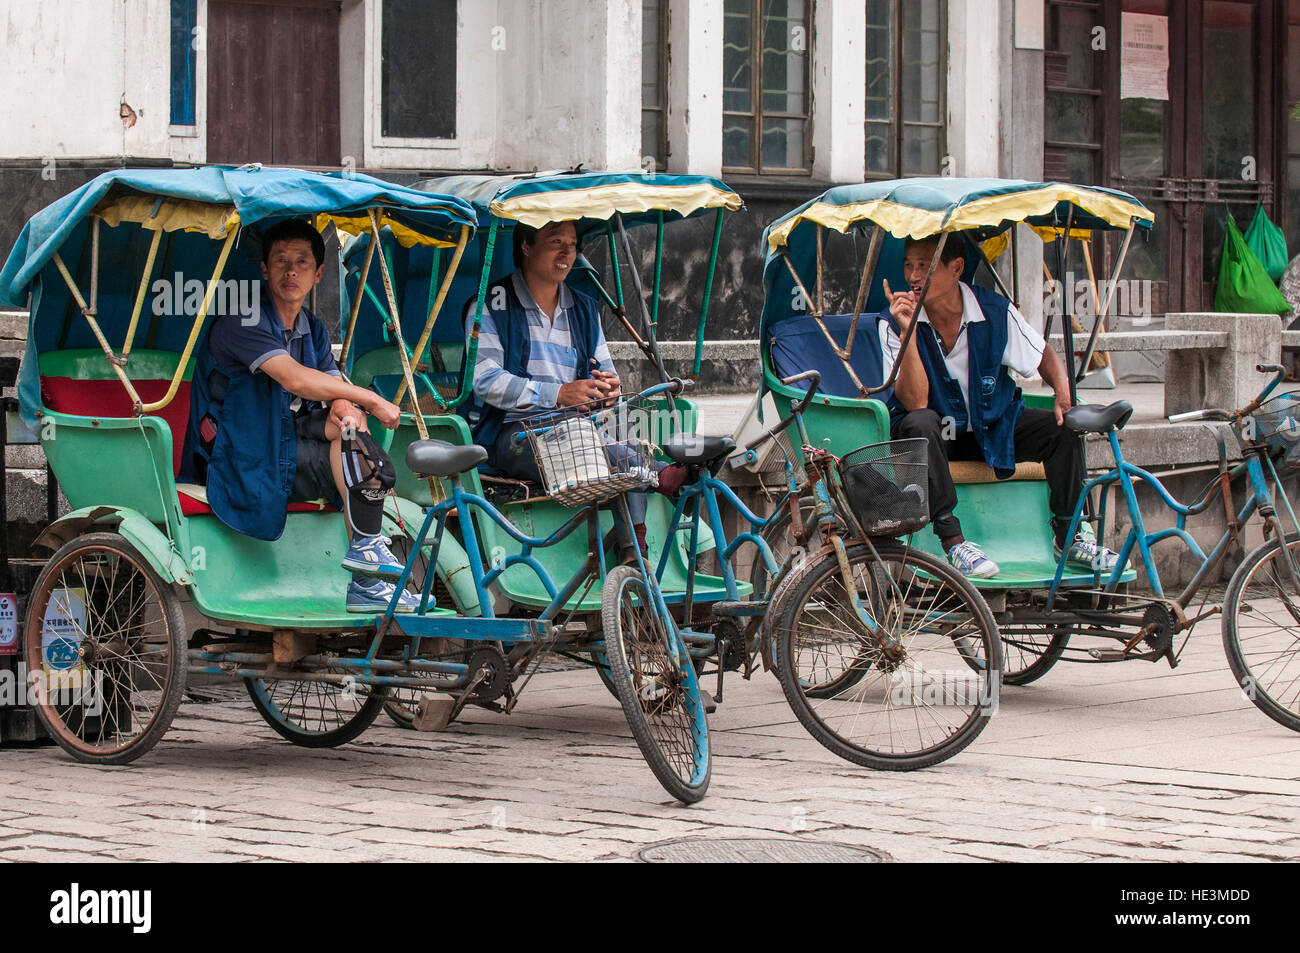 Cycle rickshaws trishaws taxis drivers in the water village of Tongli, China. Stock Photo